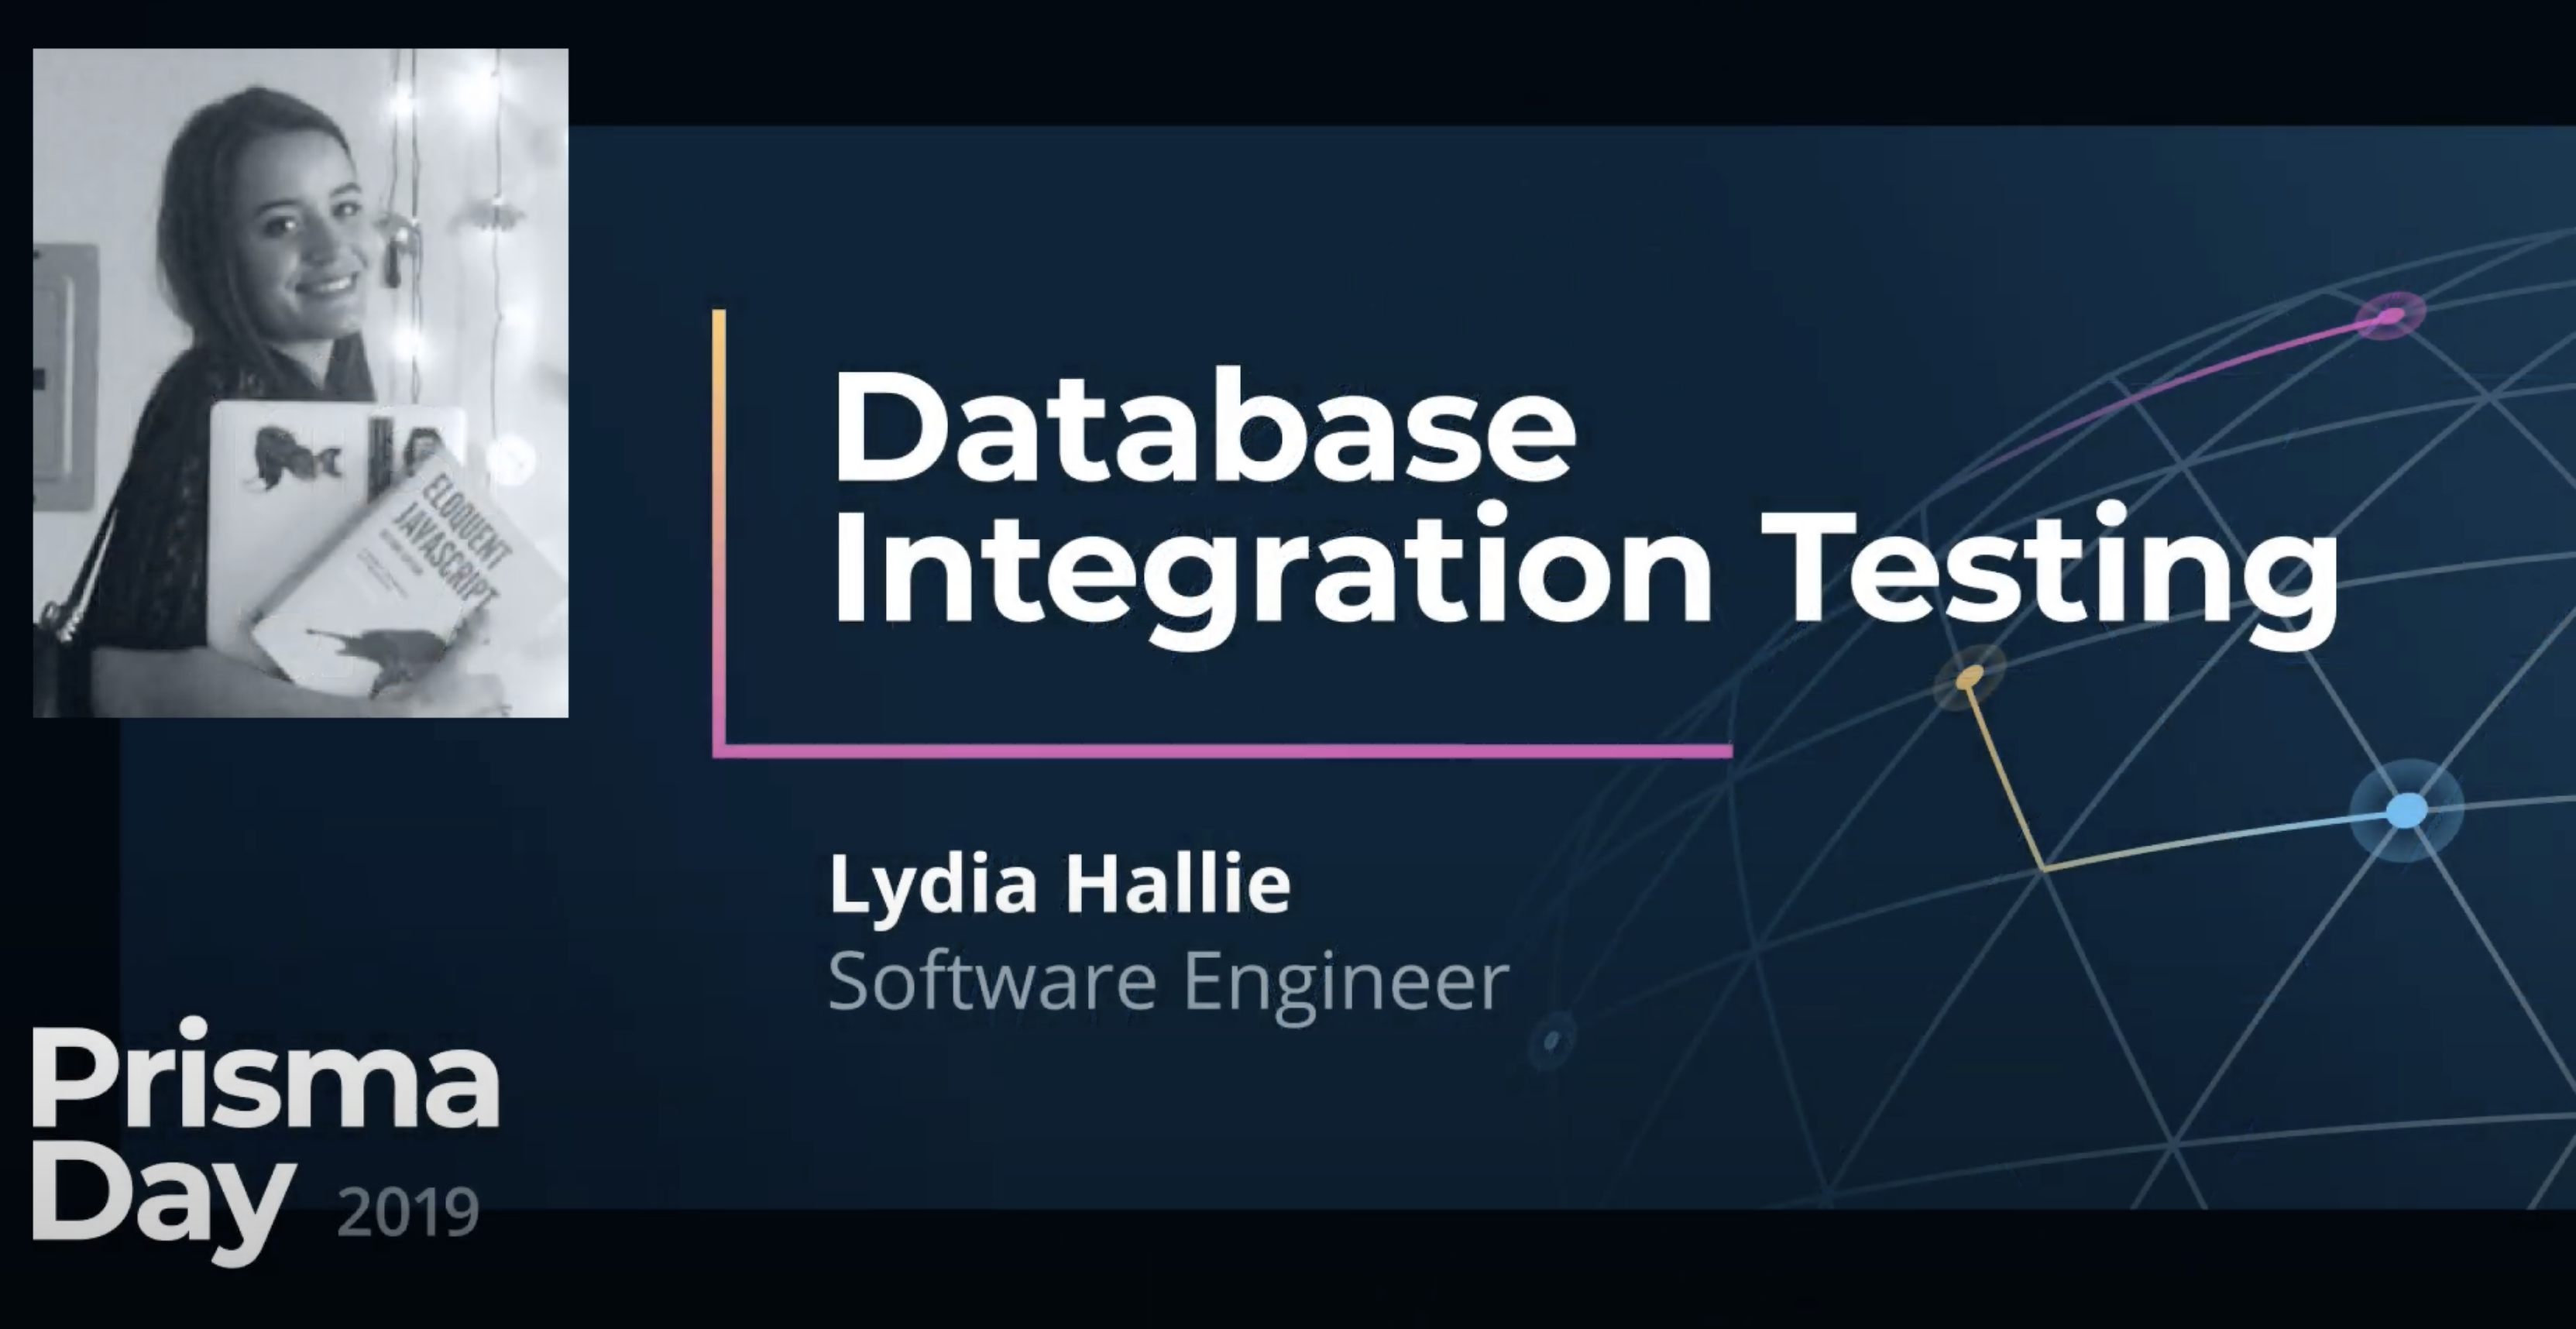 Database Integration Testing by Lydia Hallie